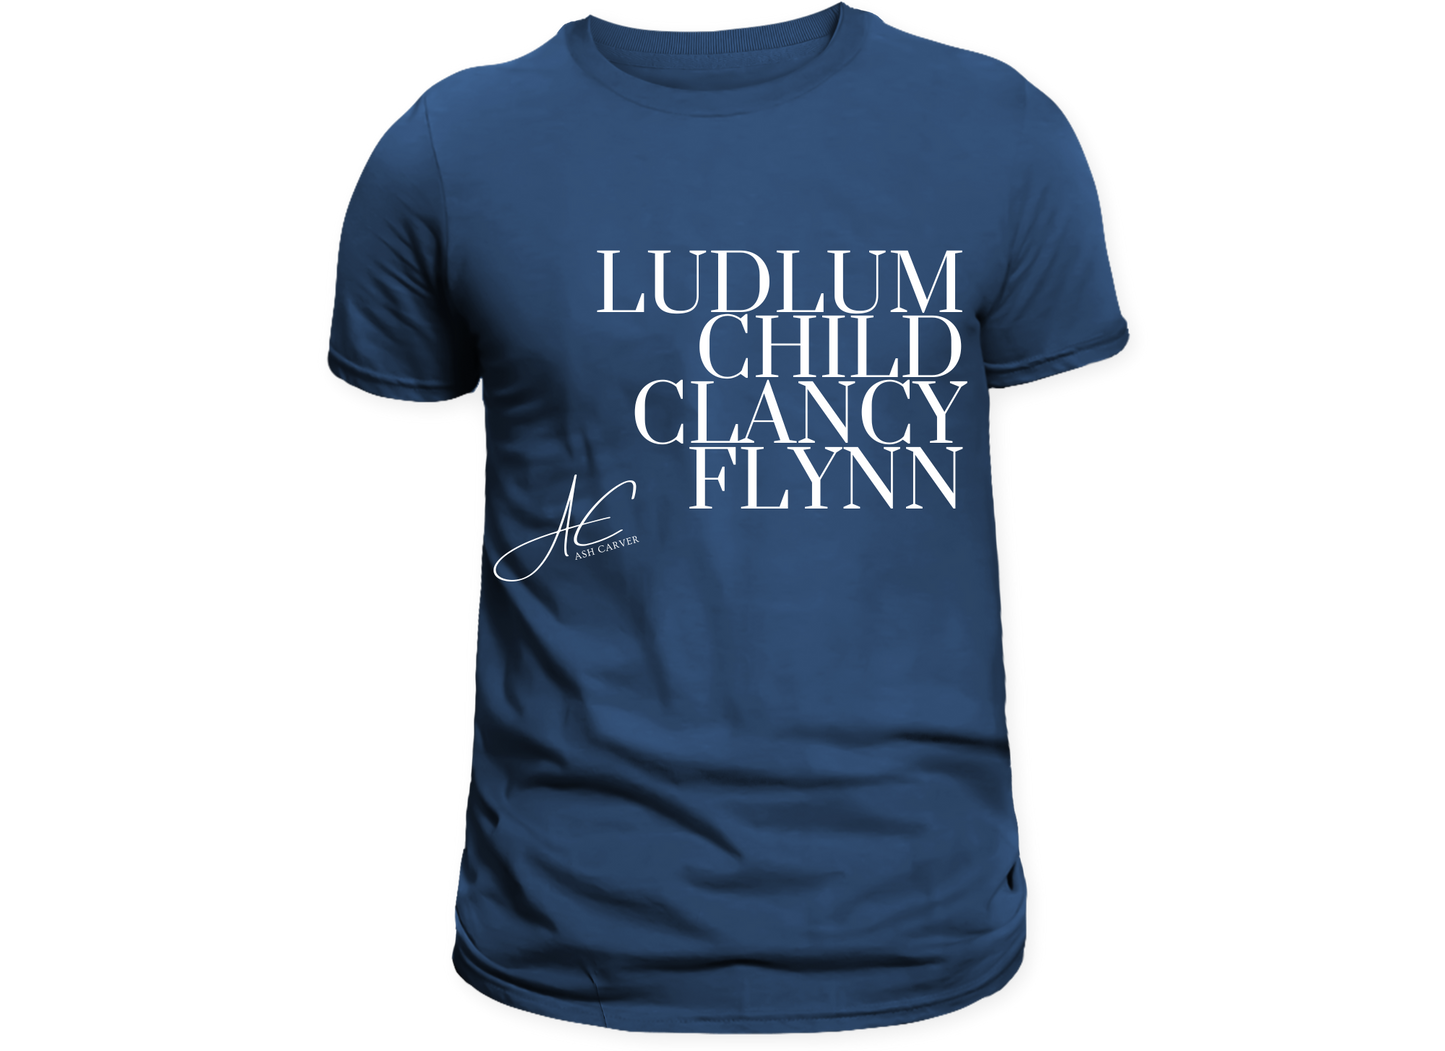 Ludlum, Child, Clancy, Flynn Inspired Literary Shirt